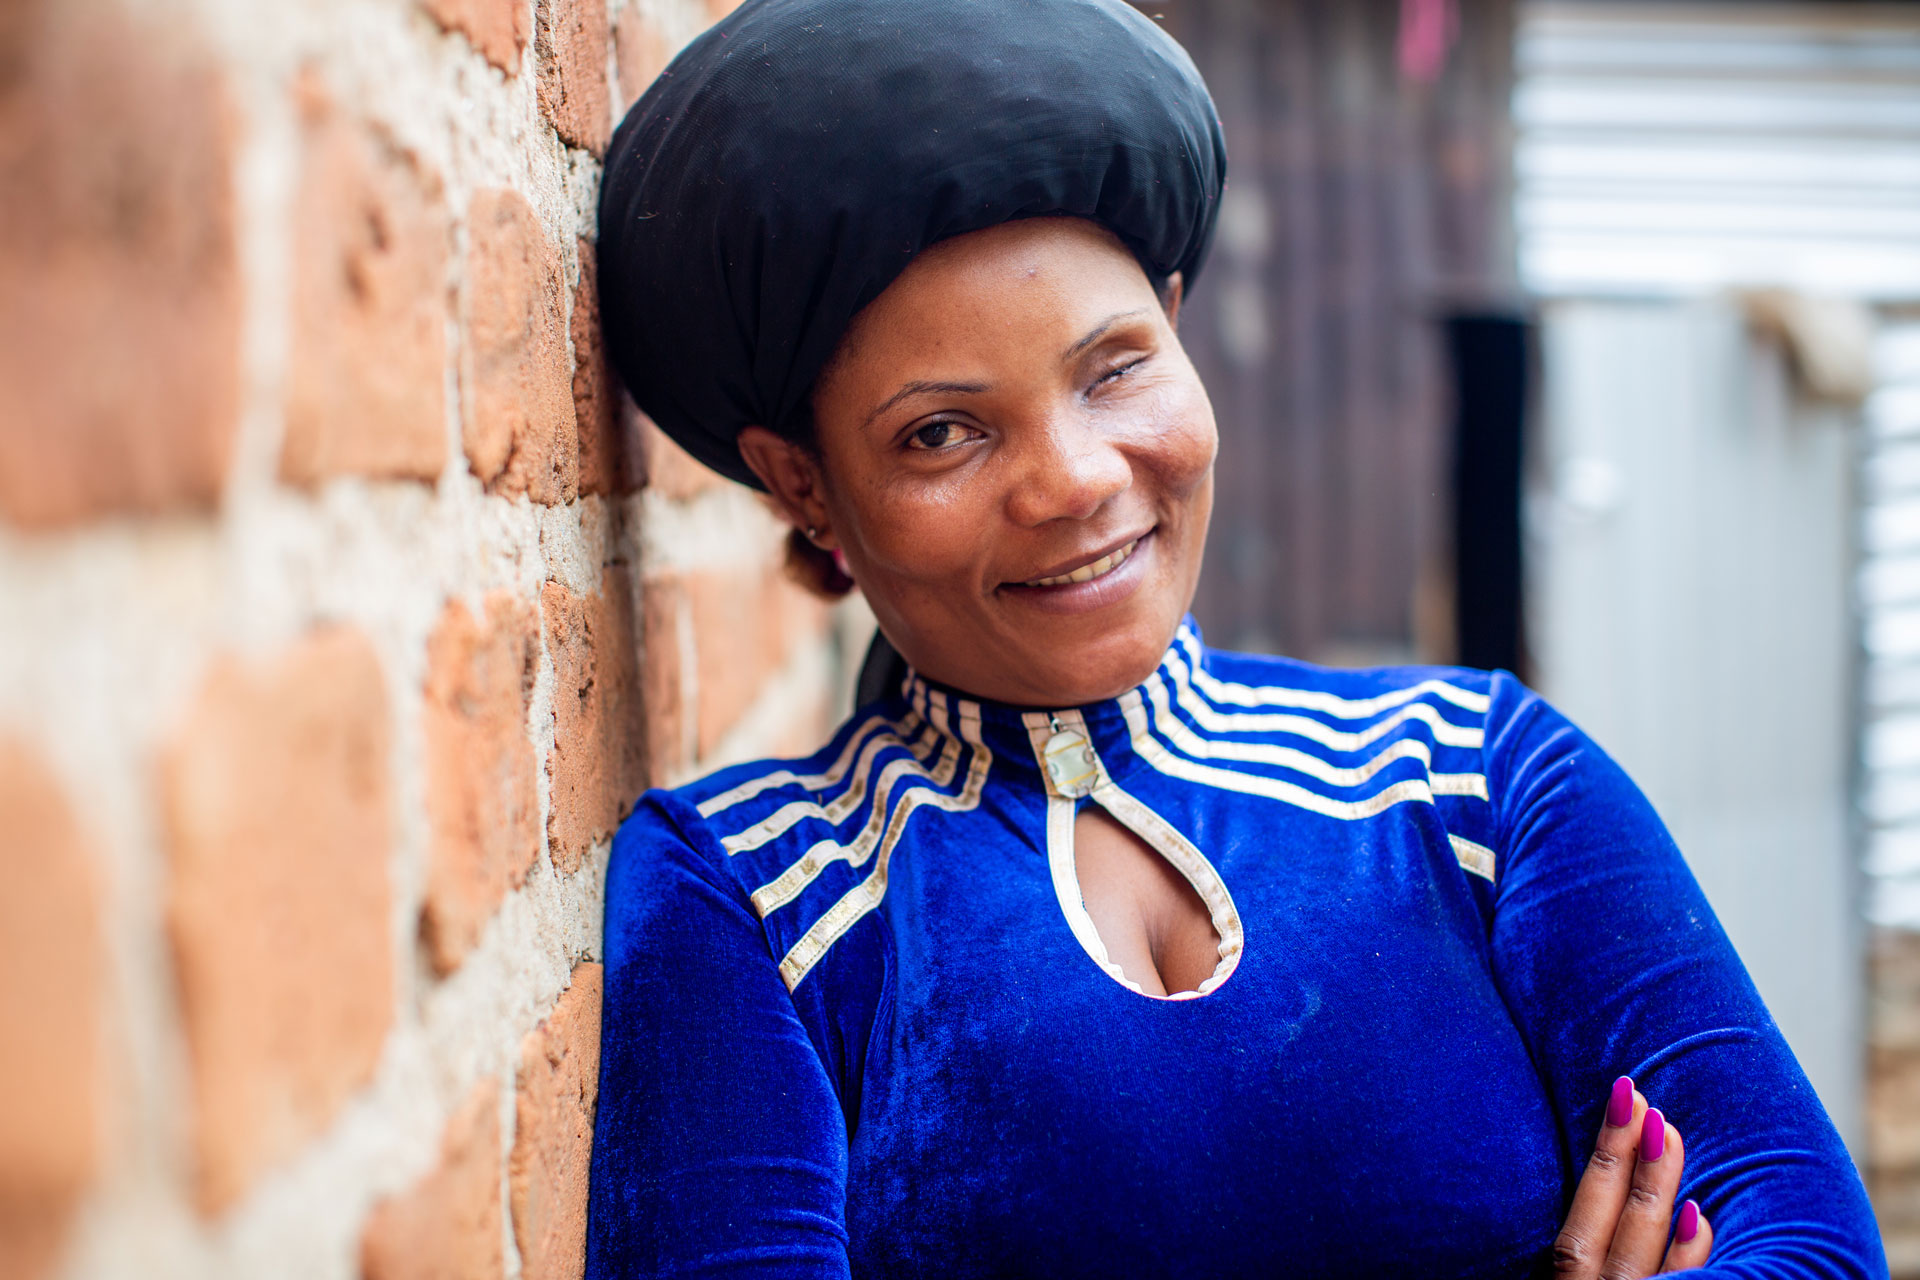 Com apoio da ActionAid, Melisende pôde reconstruir sua vida. Foto: ActionAid